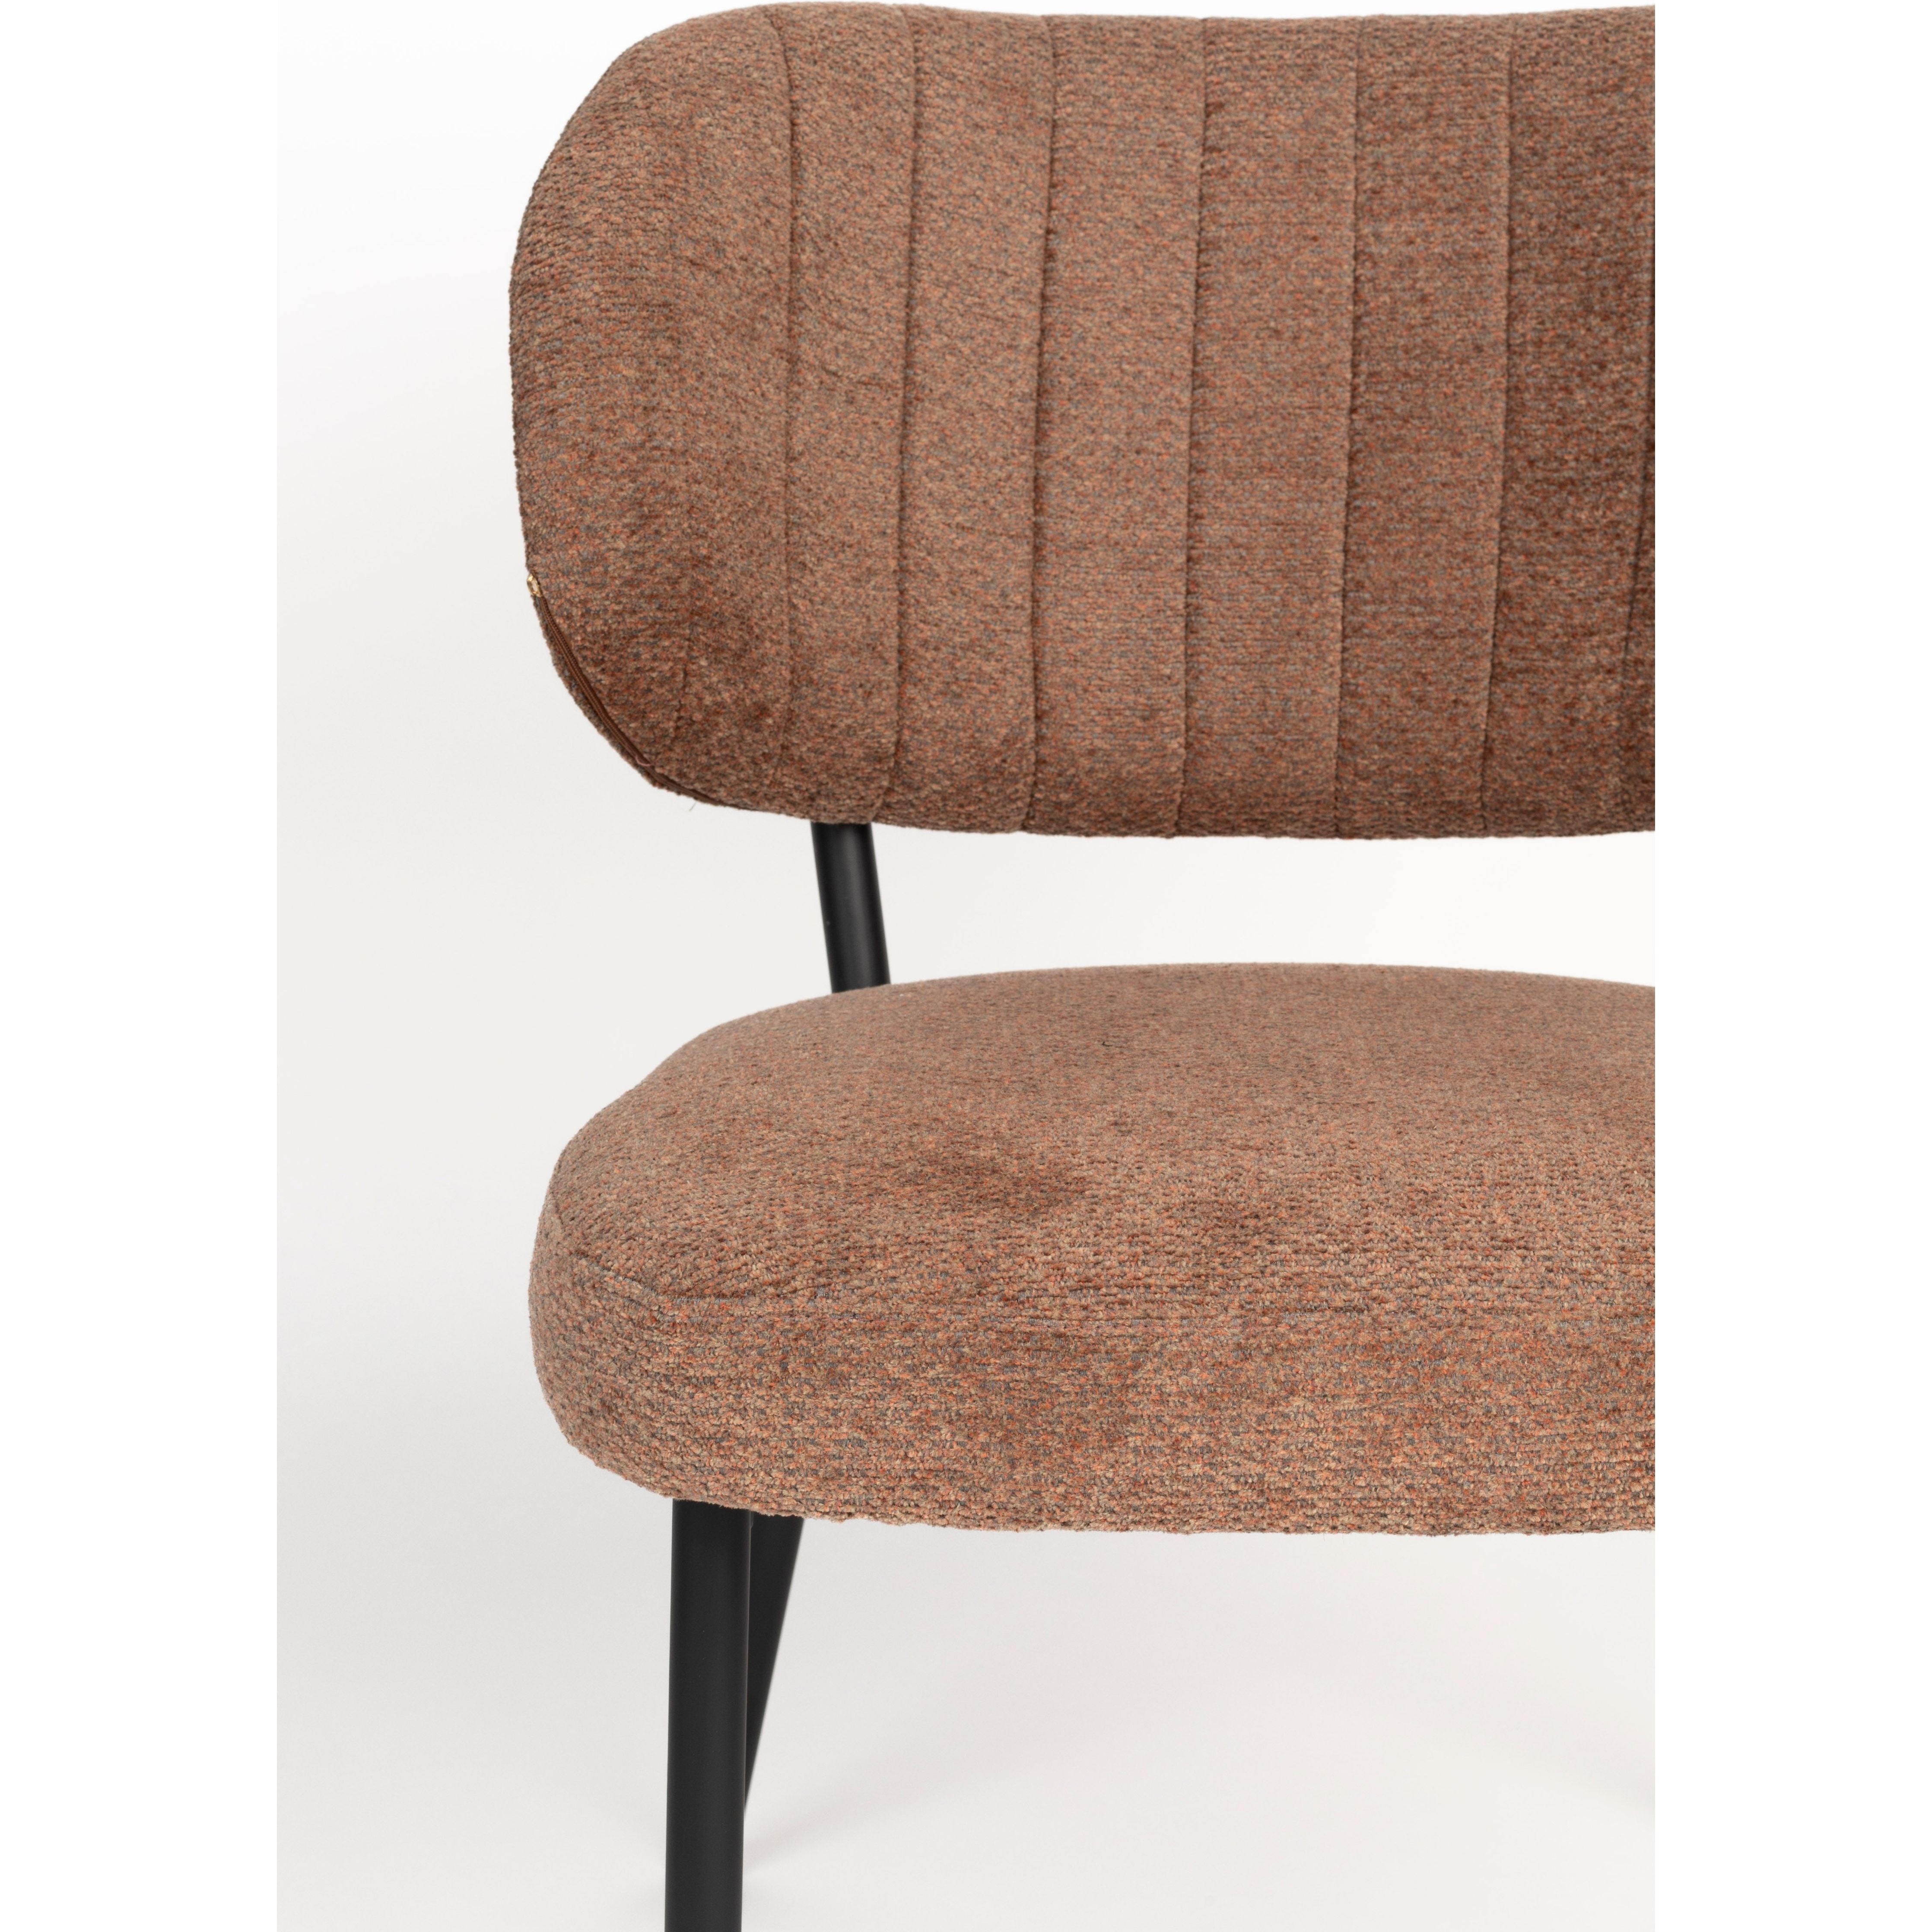 Chair sanne orange gray | 2 pieces